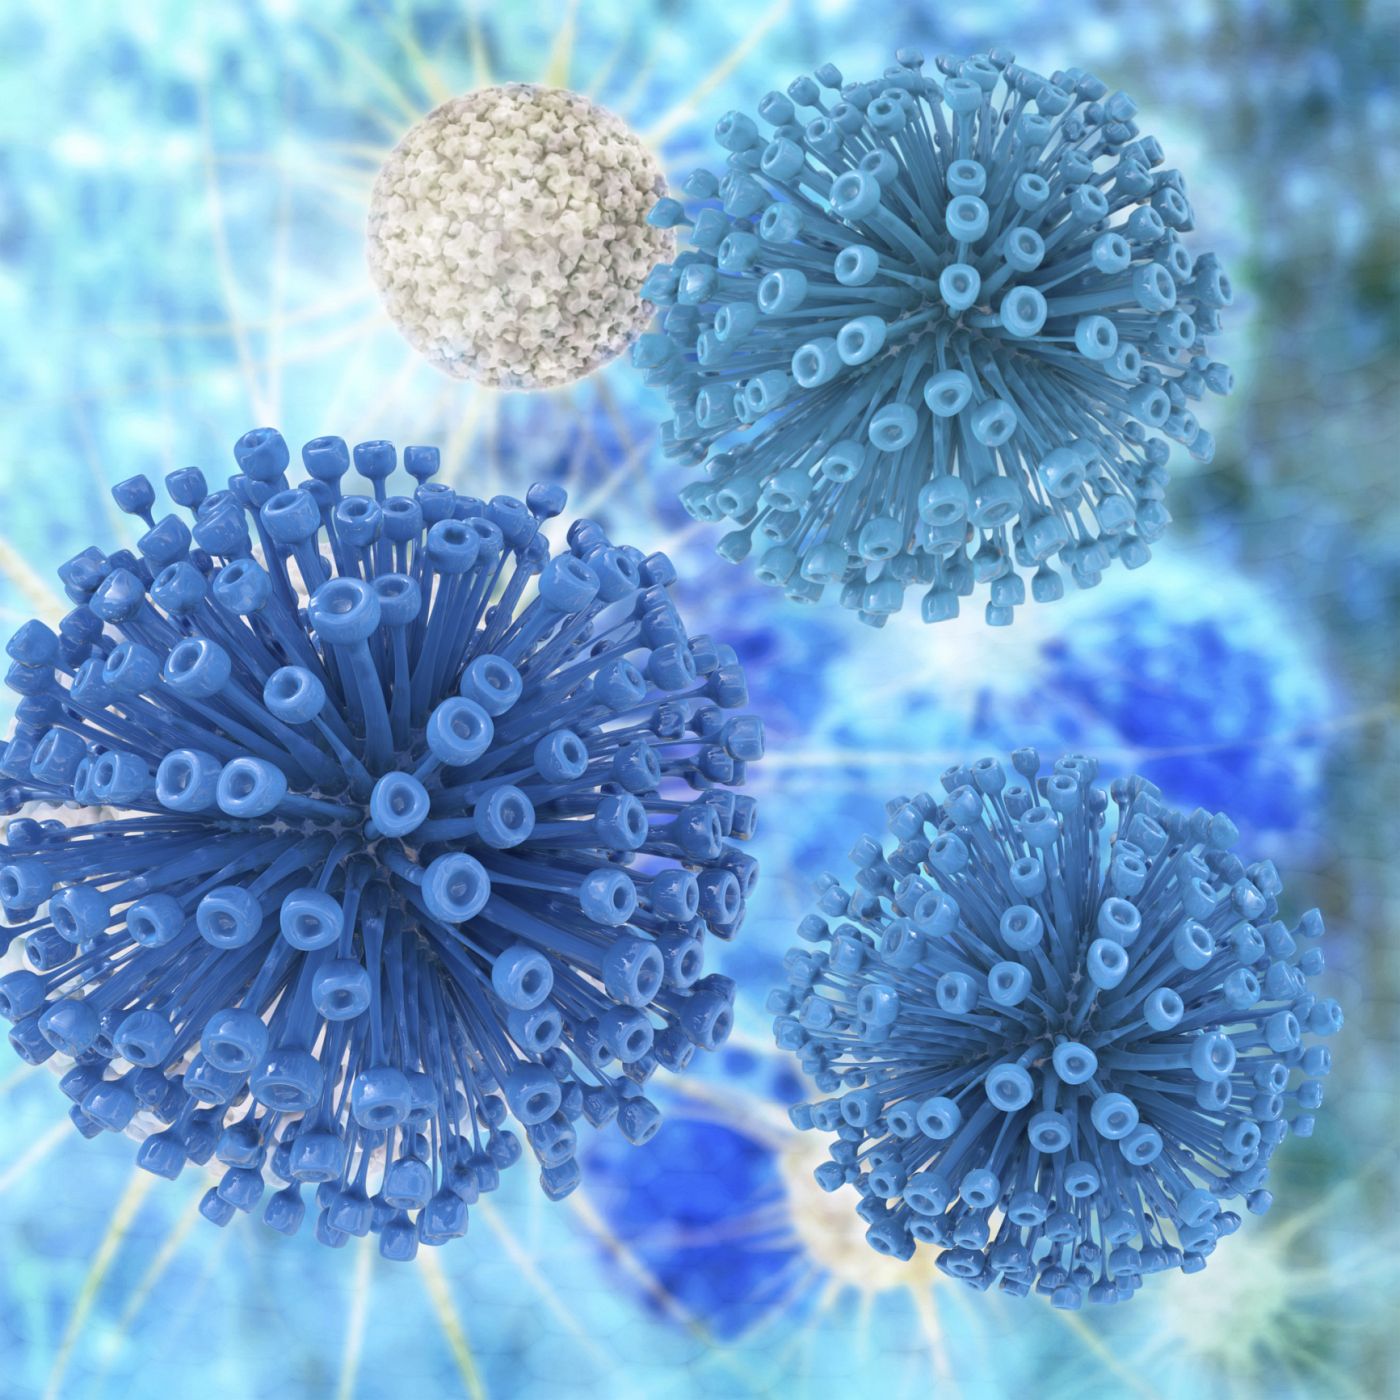 Una imagen tridimensional del virus del sida